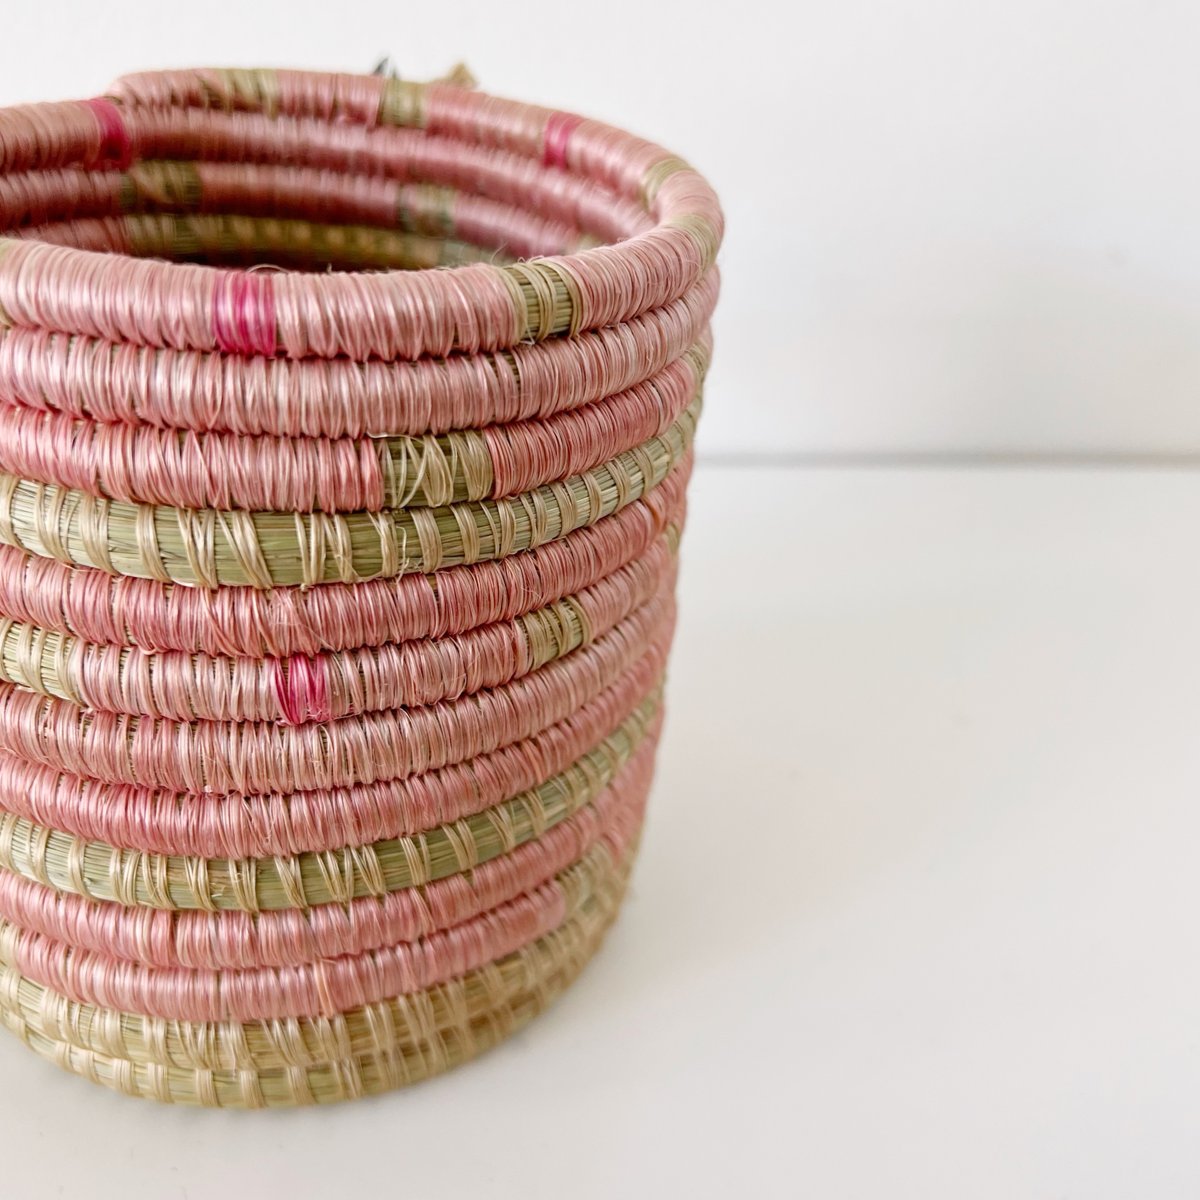 mondocherry - African woven planter "Muyaga" | pink | small - close